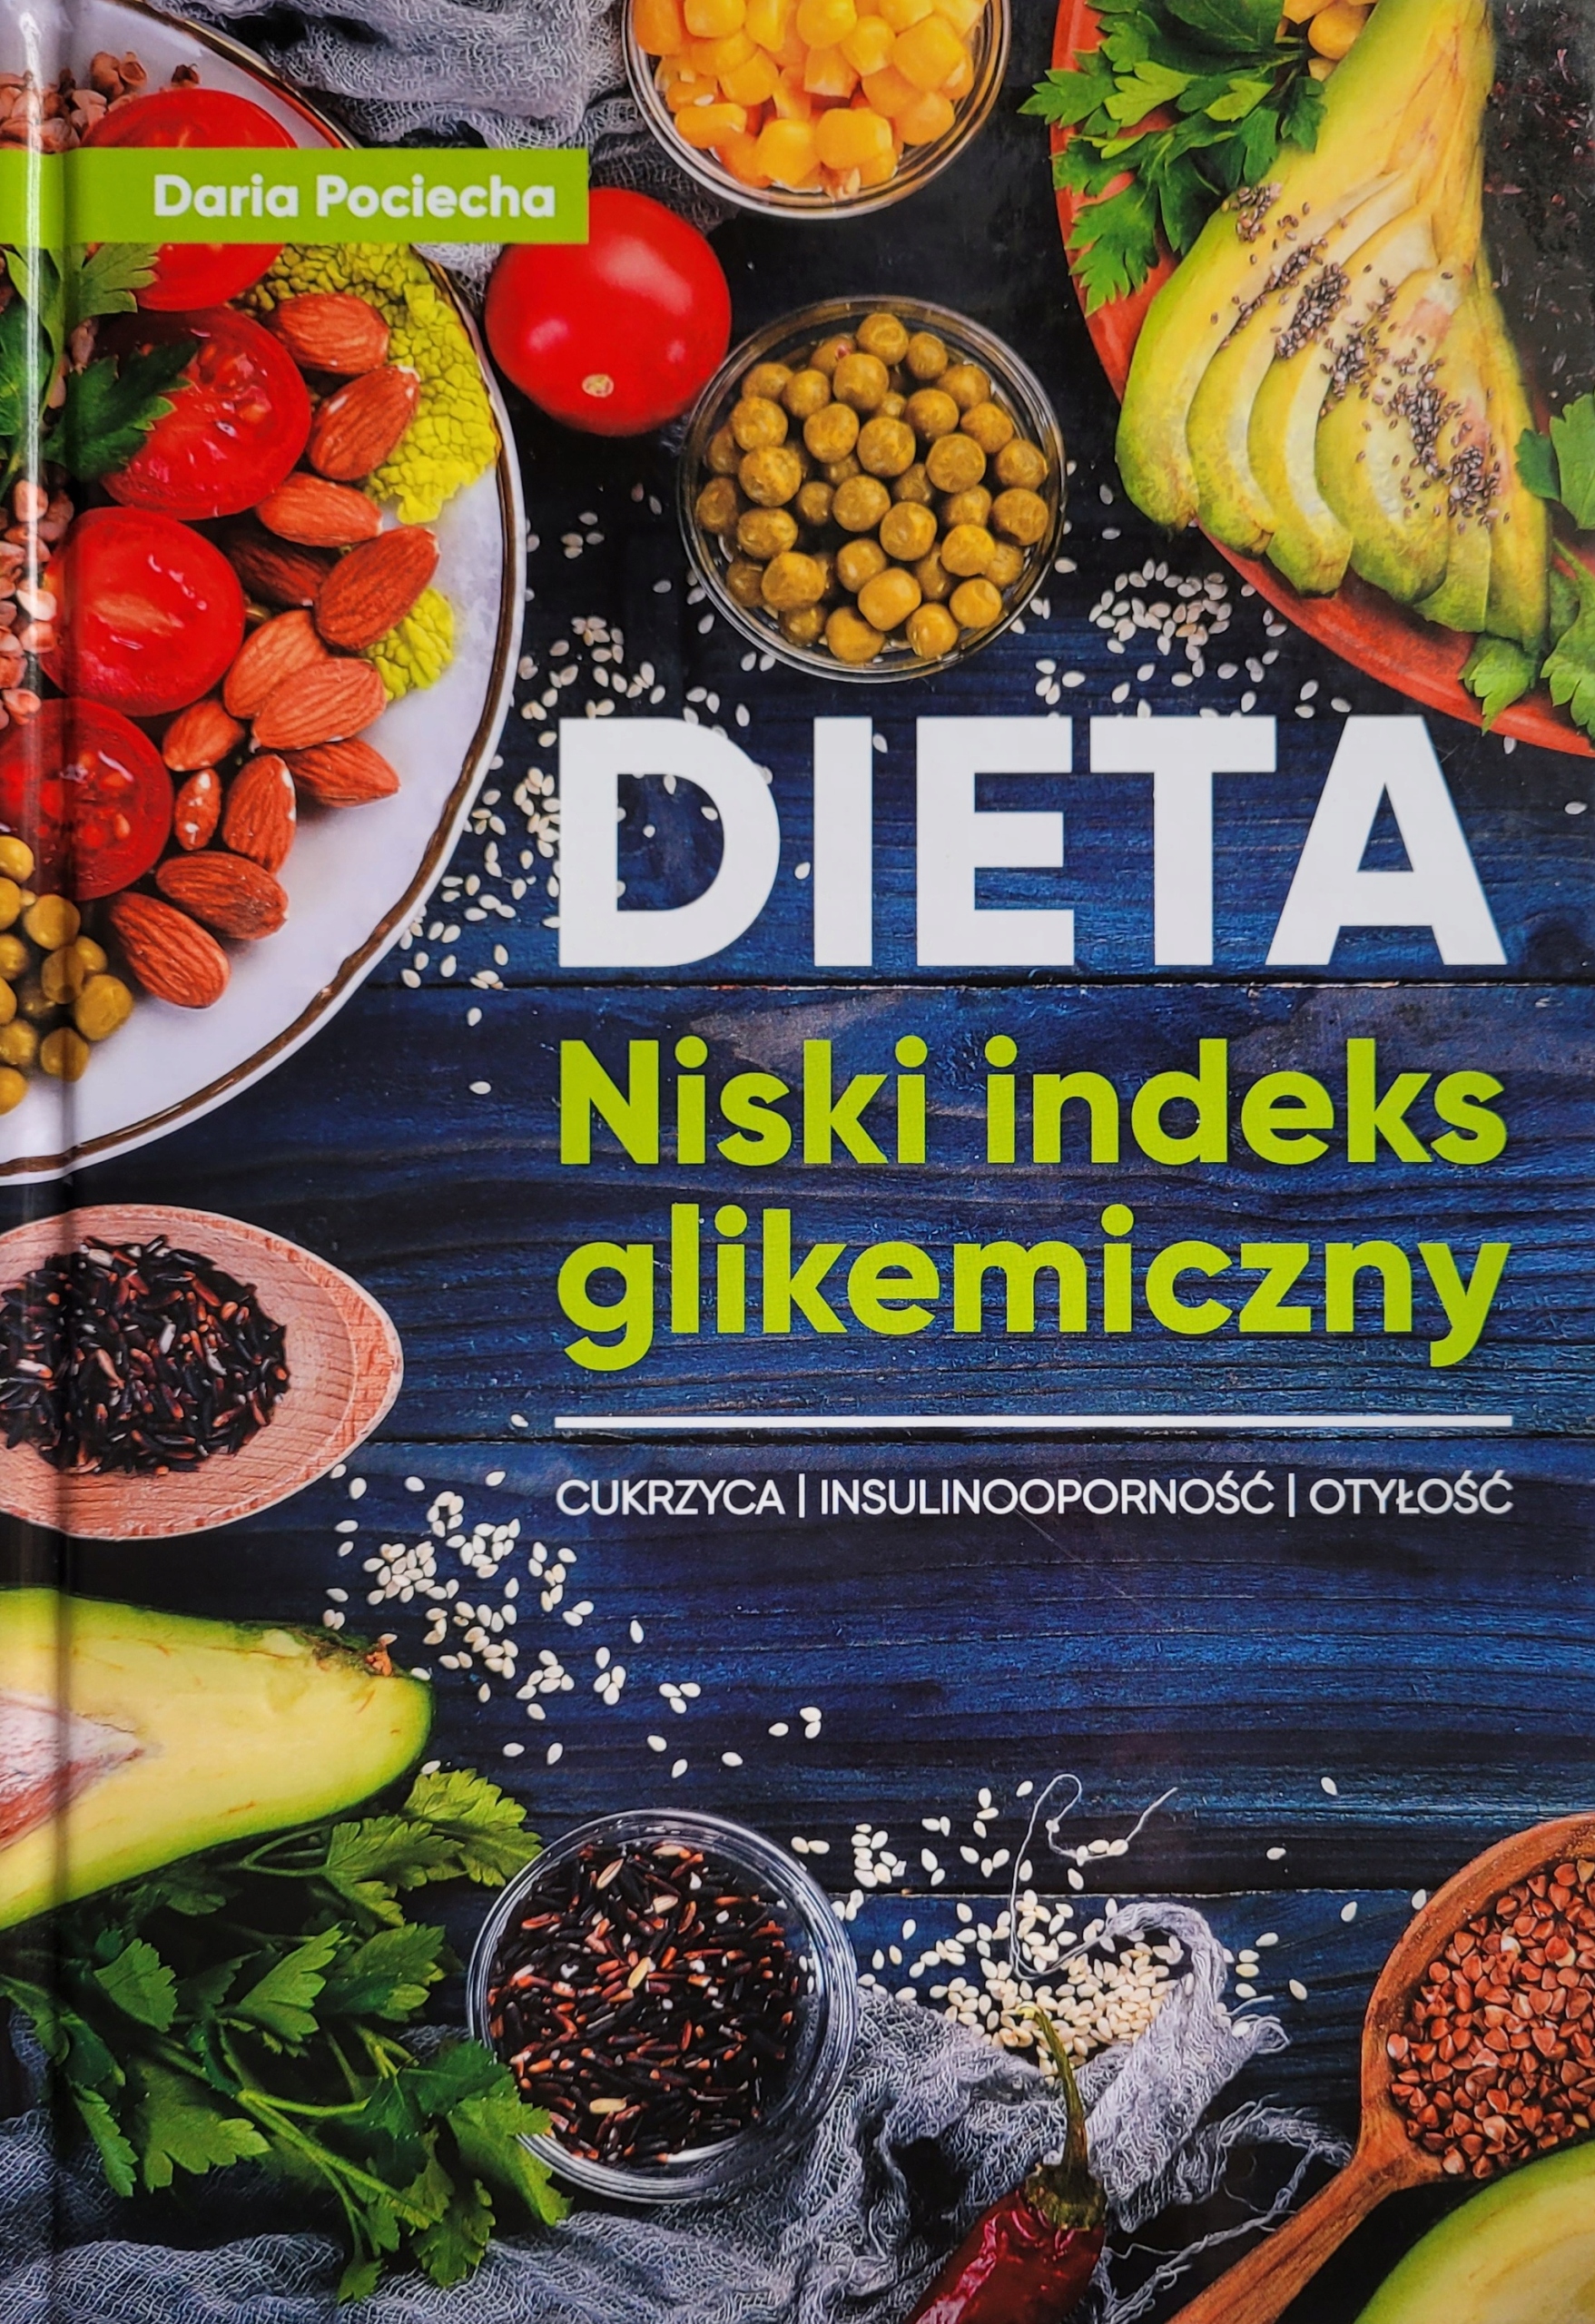 Dieta Niski indeks glikemiczny Daria Pociecha